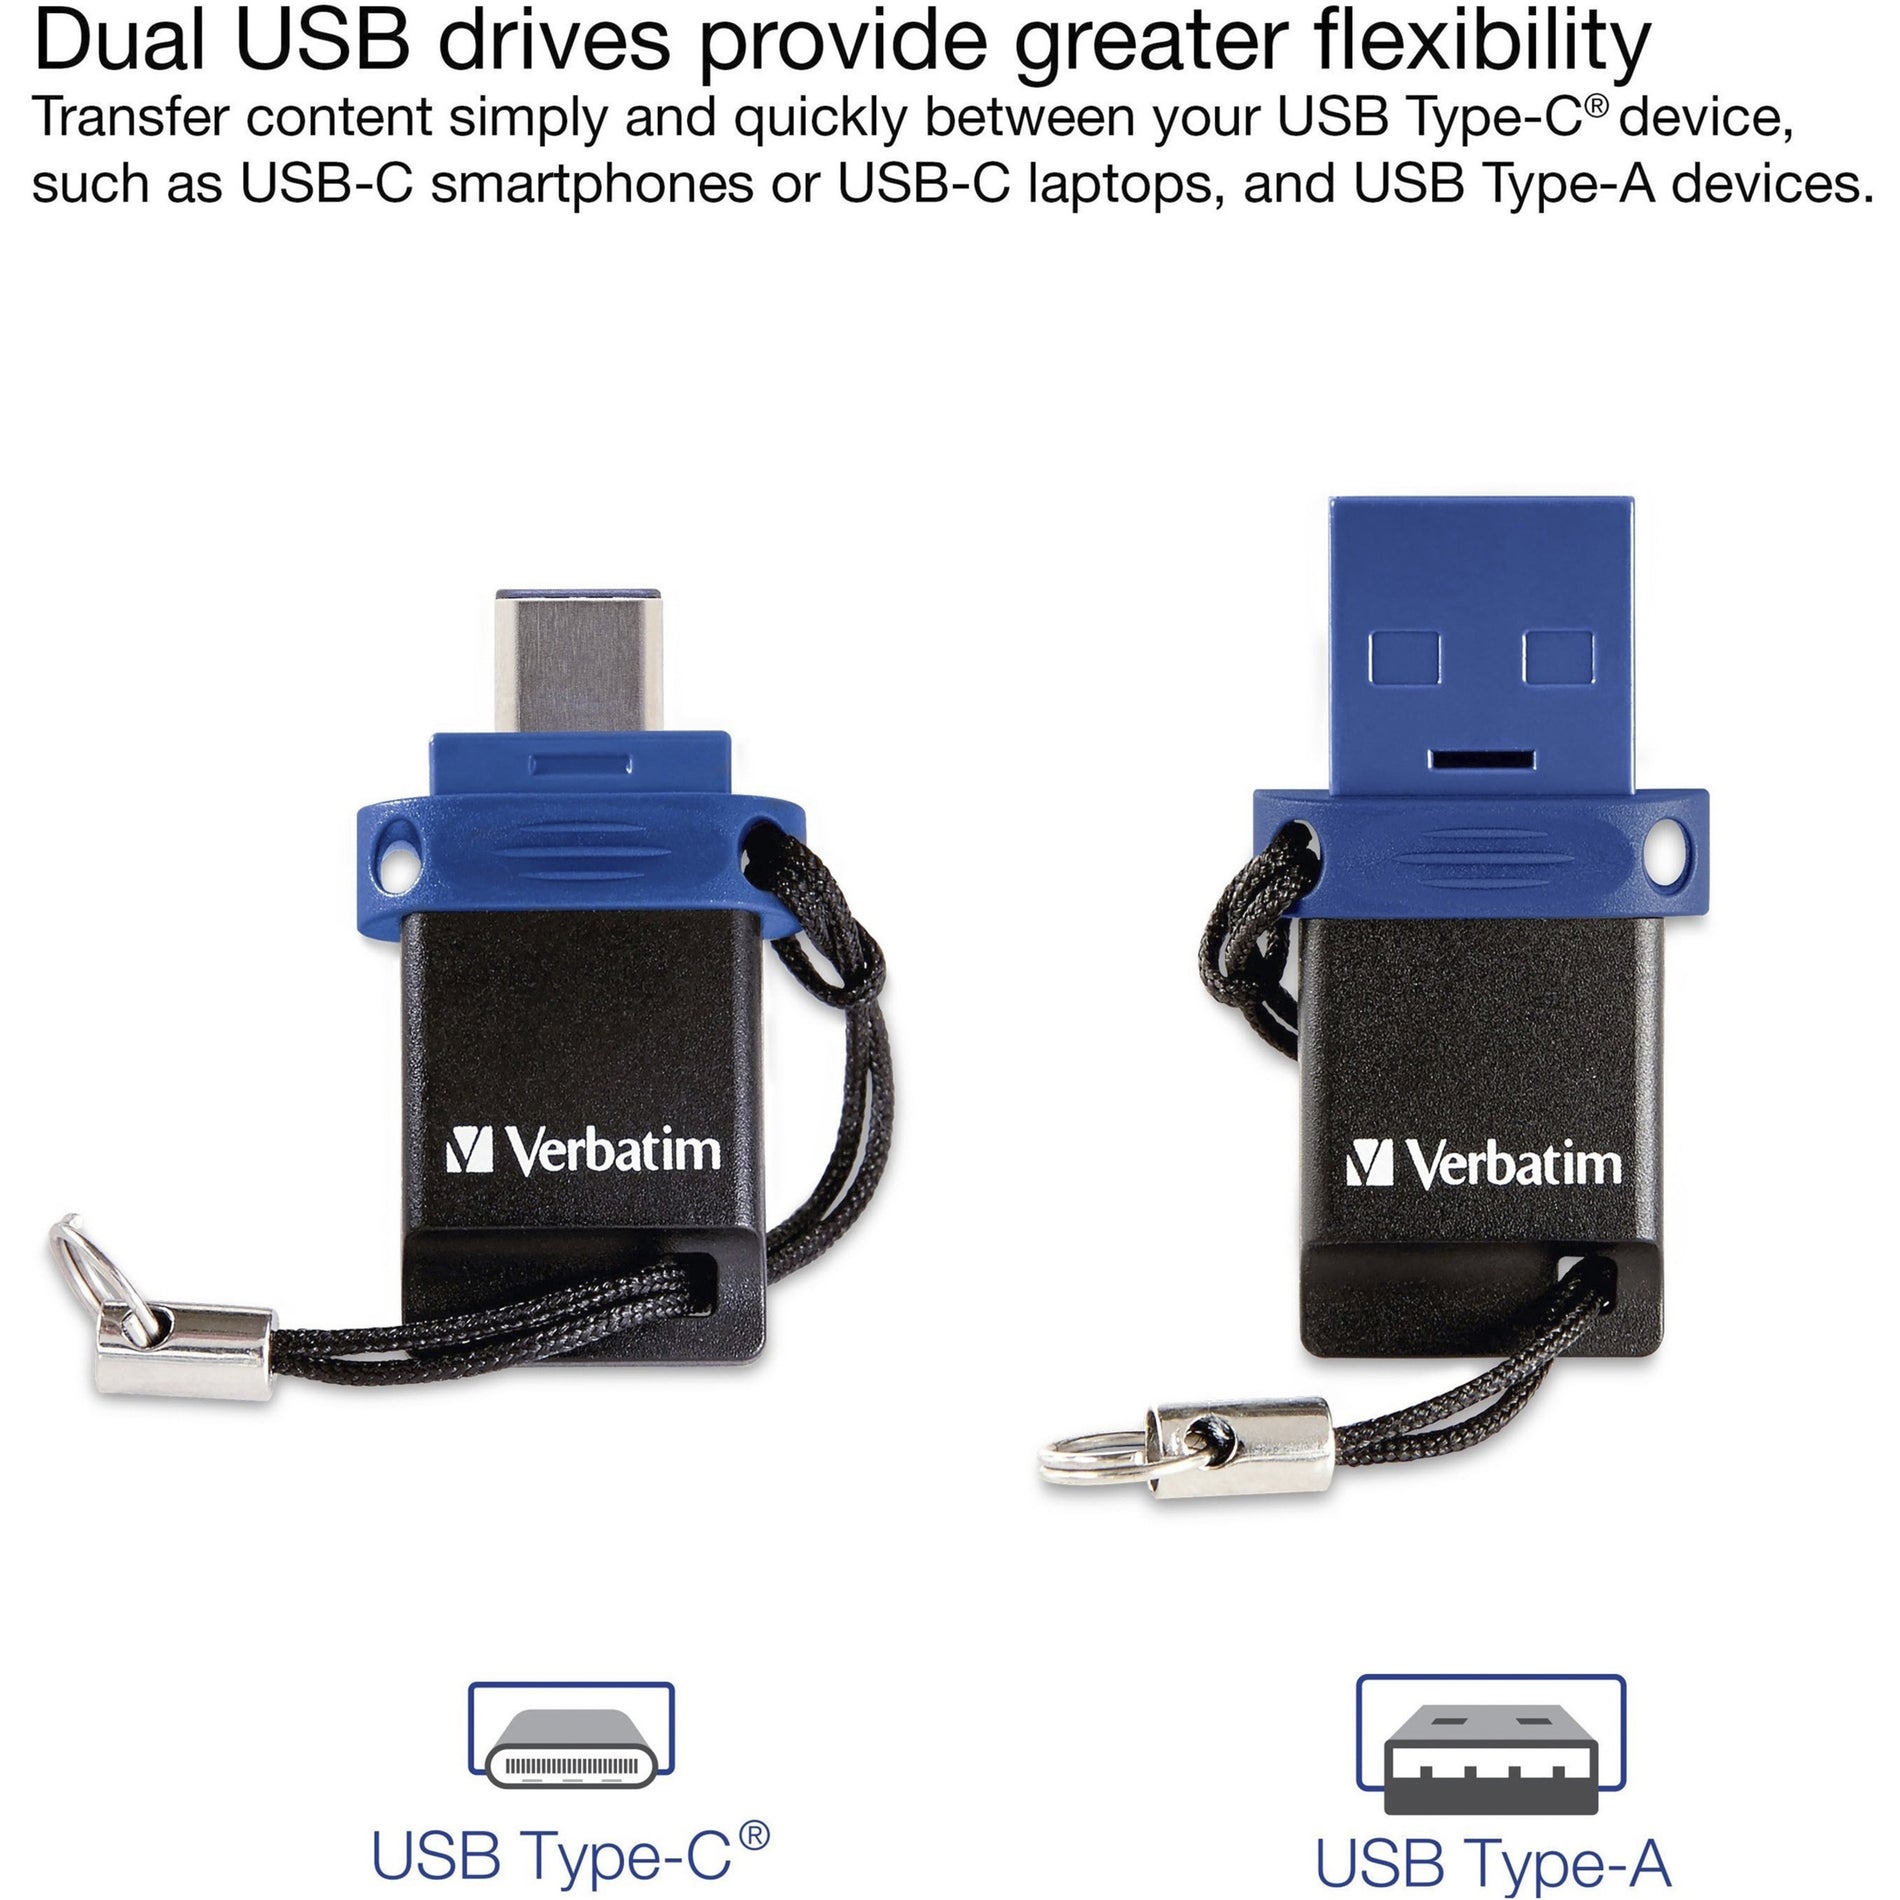 16GB - 16GB Blu - Blu Microban 99153 - Microban 99153 Store 'n' Go - Store 'n' Go Dual - Doppio USB 3.2 Gen 1 - USB 3.2 Gen 1 Flash Drive - Flash Drive